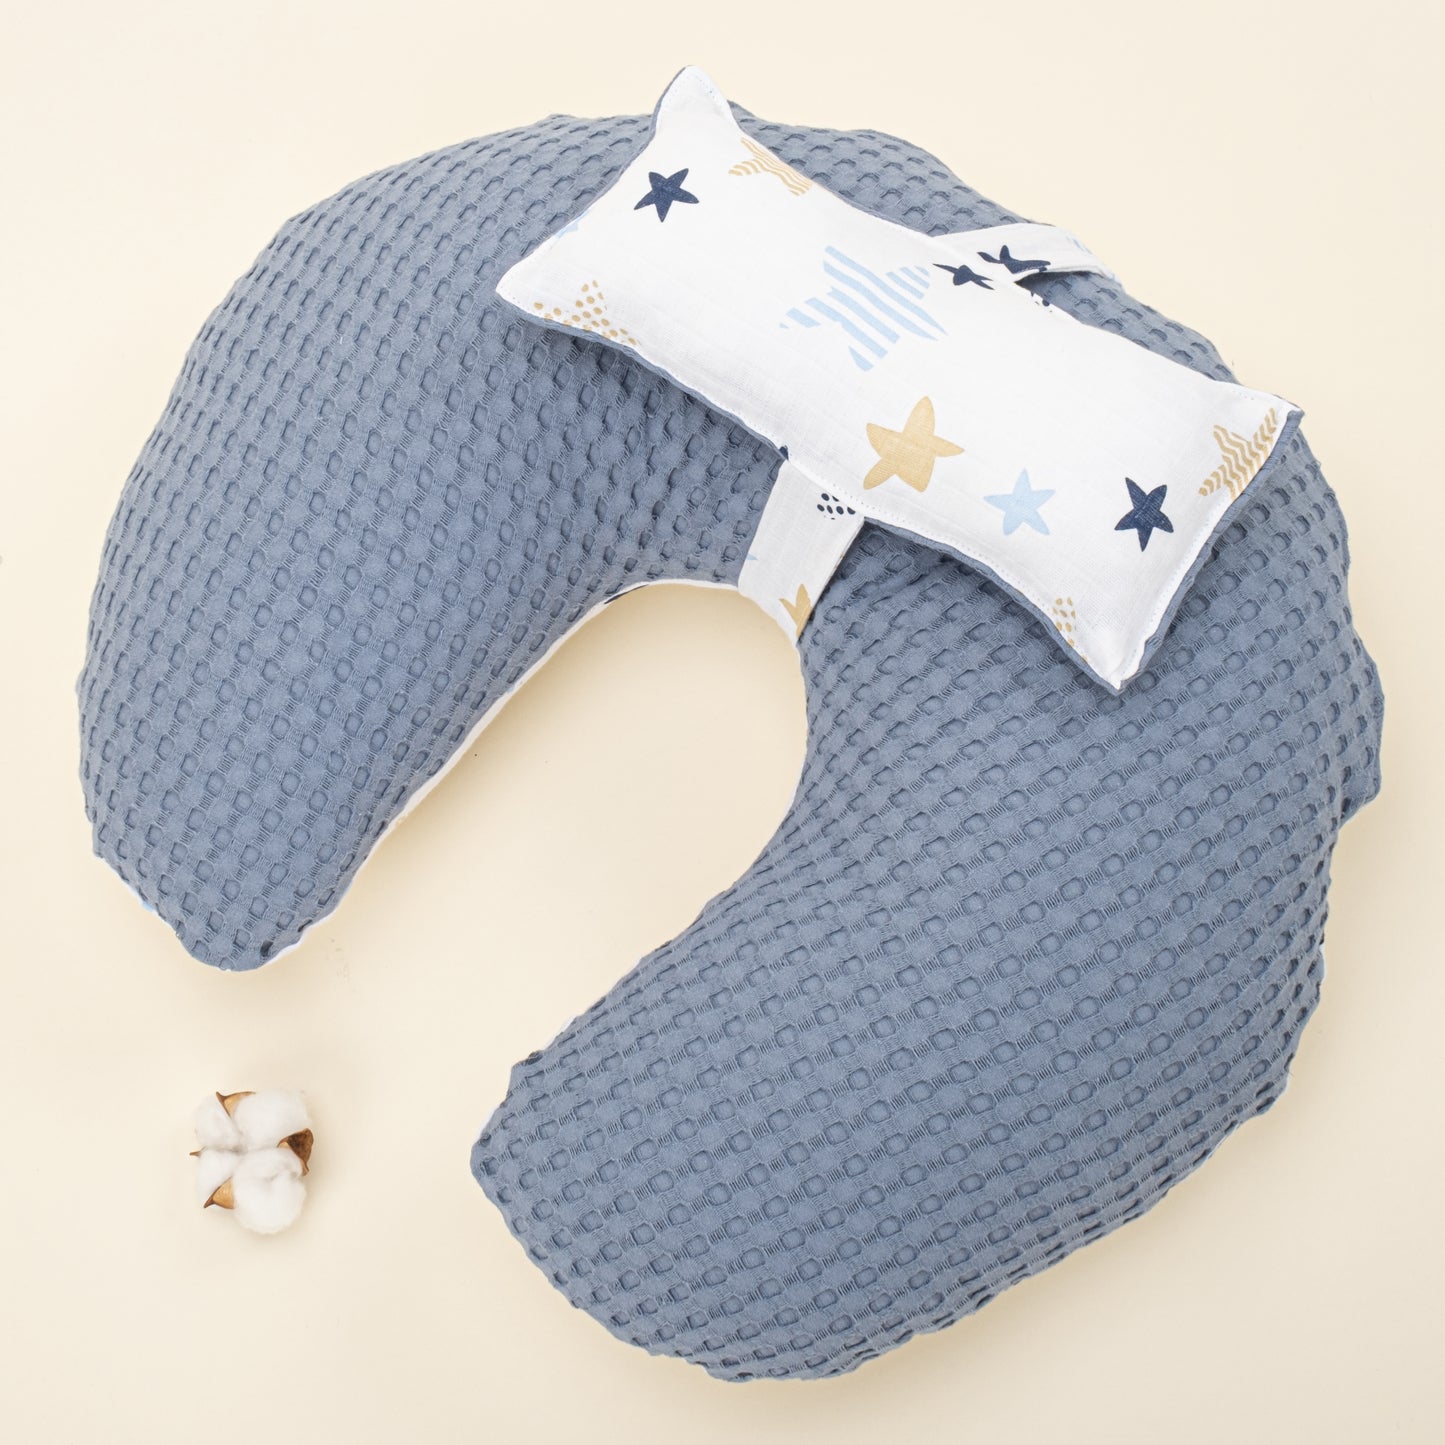 Breastfeeding Pillow - Indigo Pool Pike - Blue Star